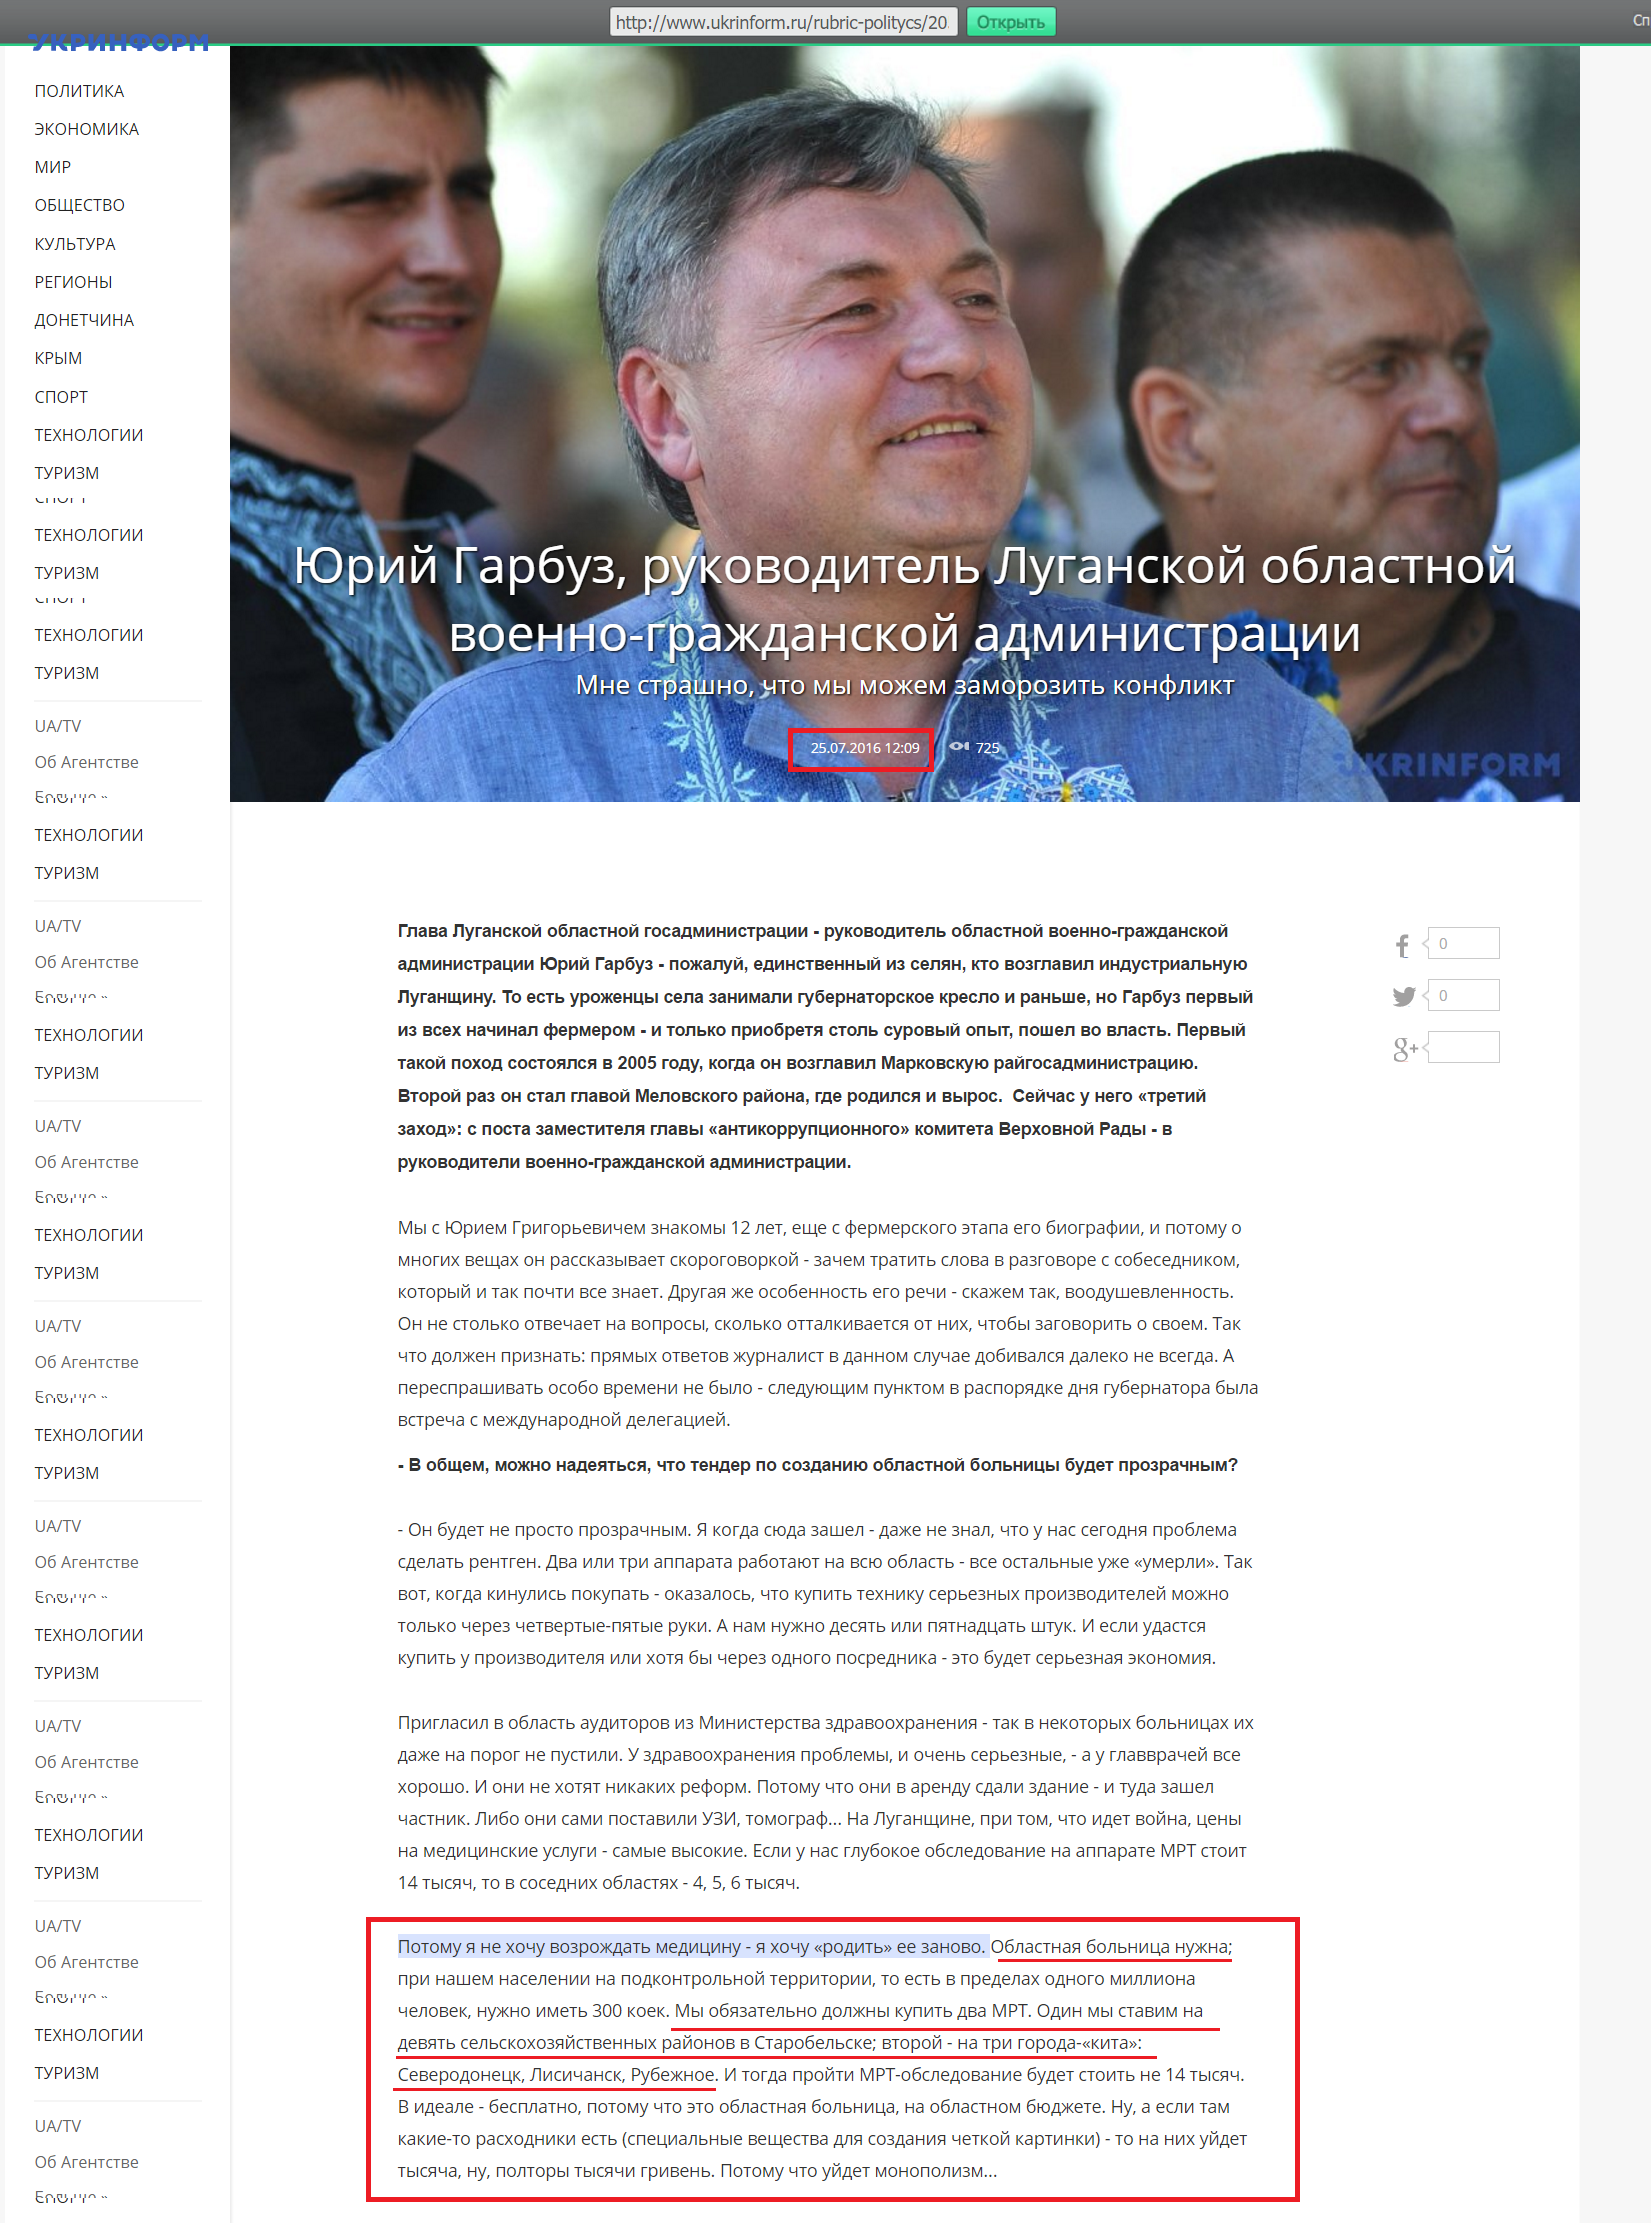 http://o53xo.ovvxe2lomzxxe3jooj2q.cmle.ru/rubric-politycs/2055902-urij-garbuz-rukovoditel-luganskoj-oblastnoj-voennograzdanskoj-administracii.html